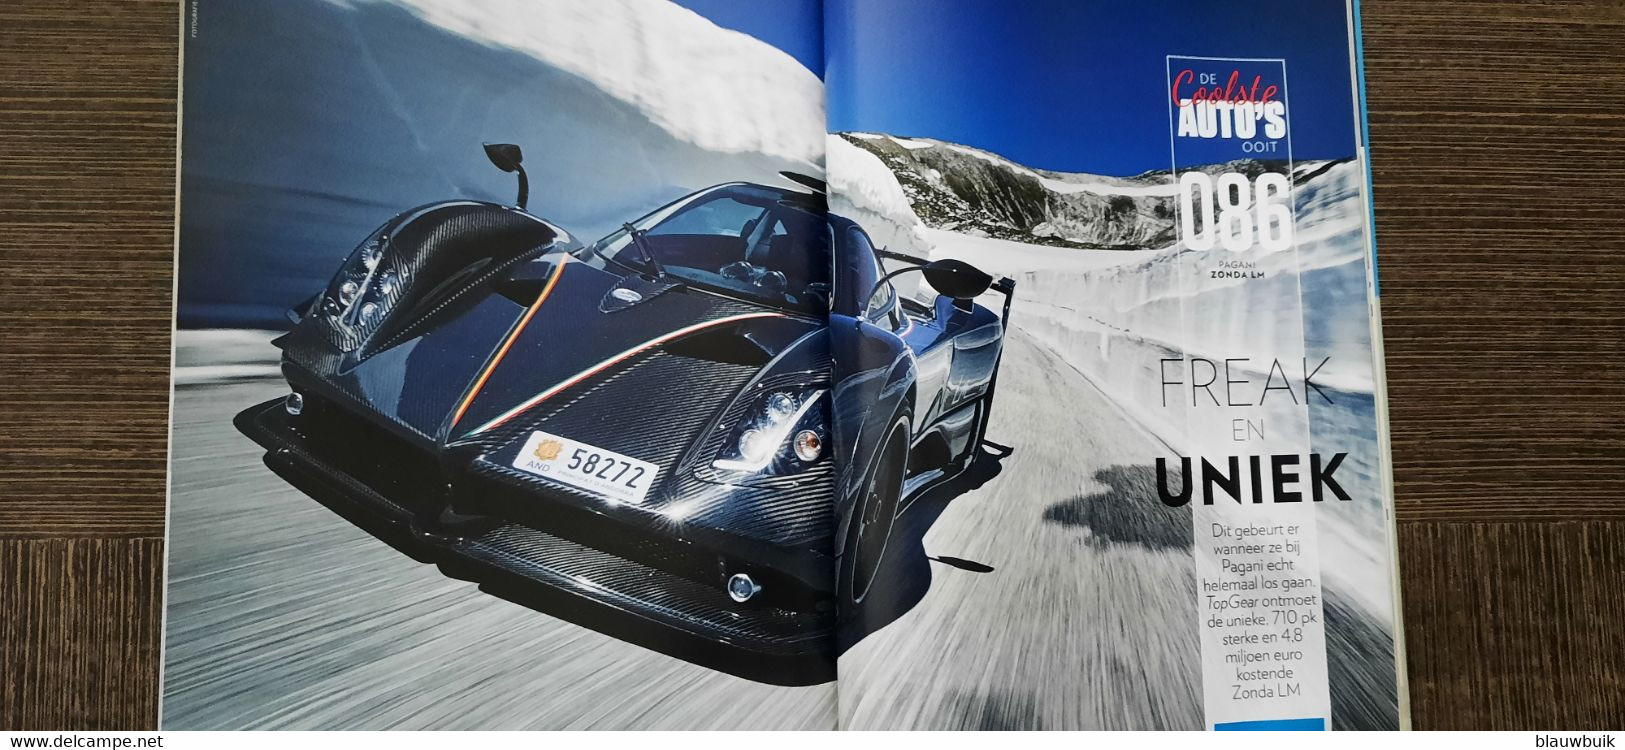 Top Gear Magazine N°125 -  2015 - de 133 coolste auto's